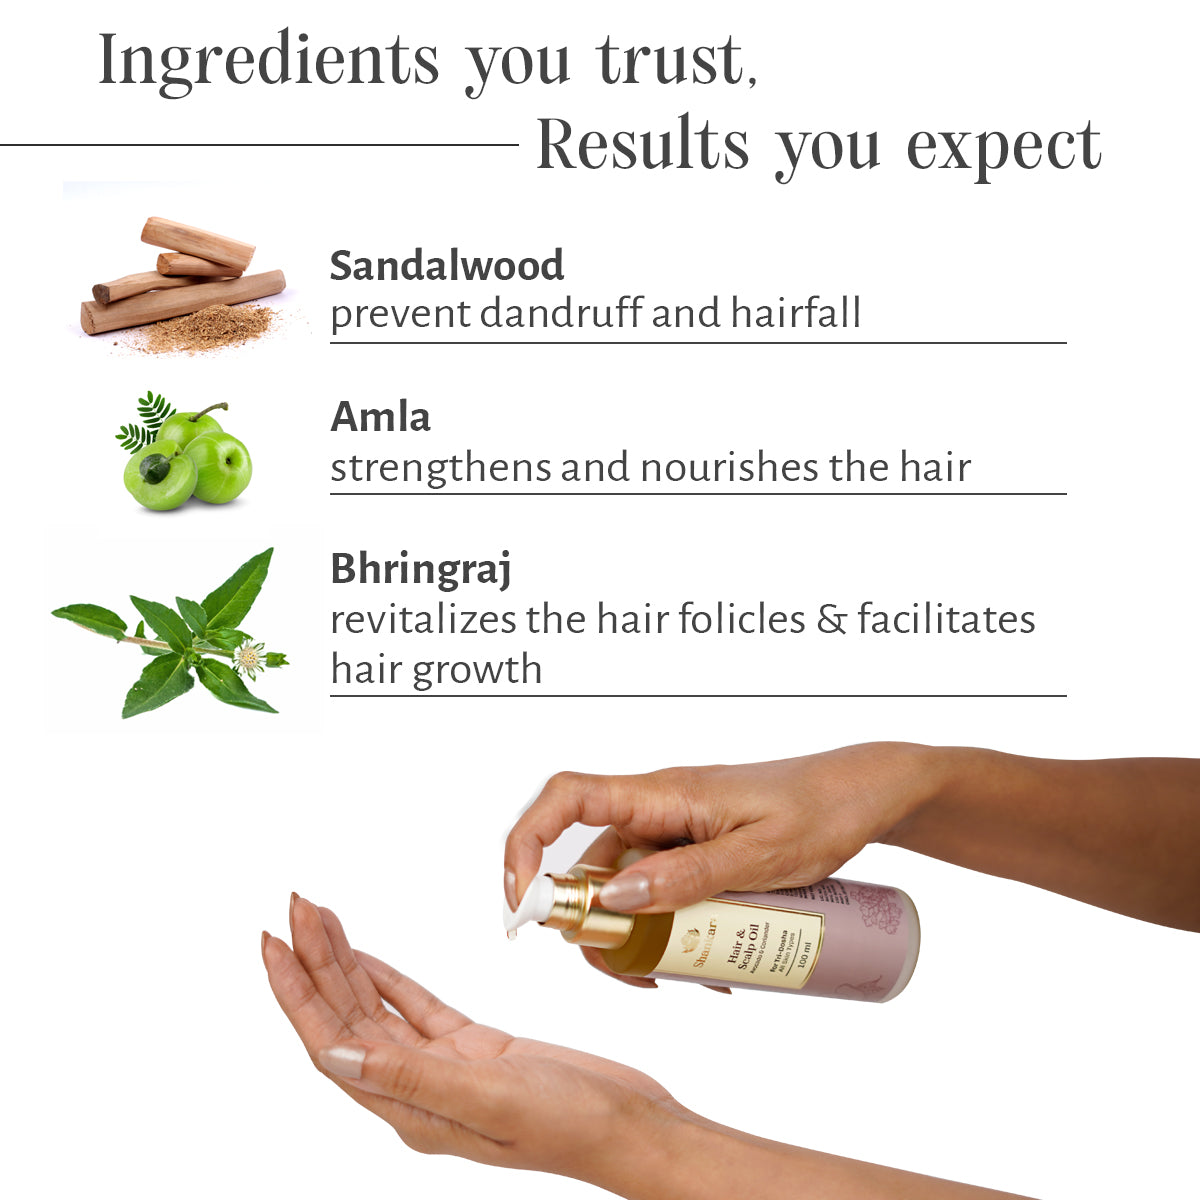 Hair & Scalp Oil